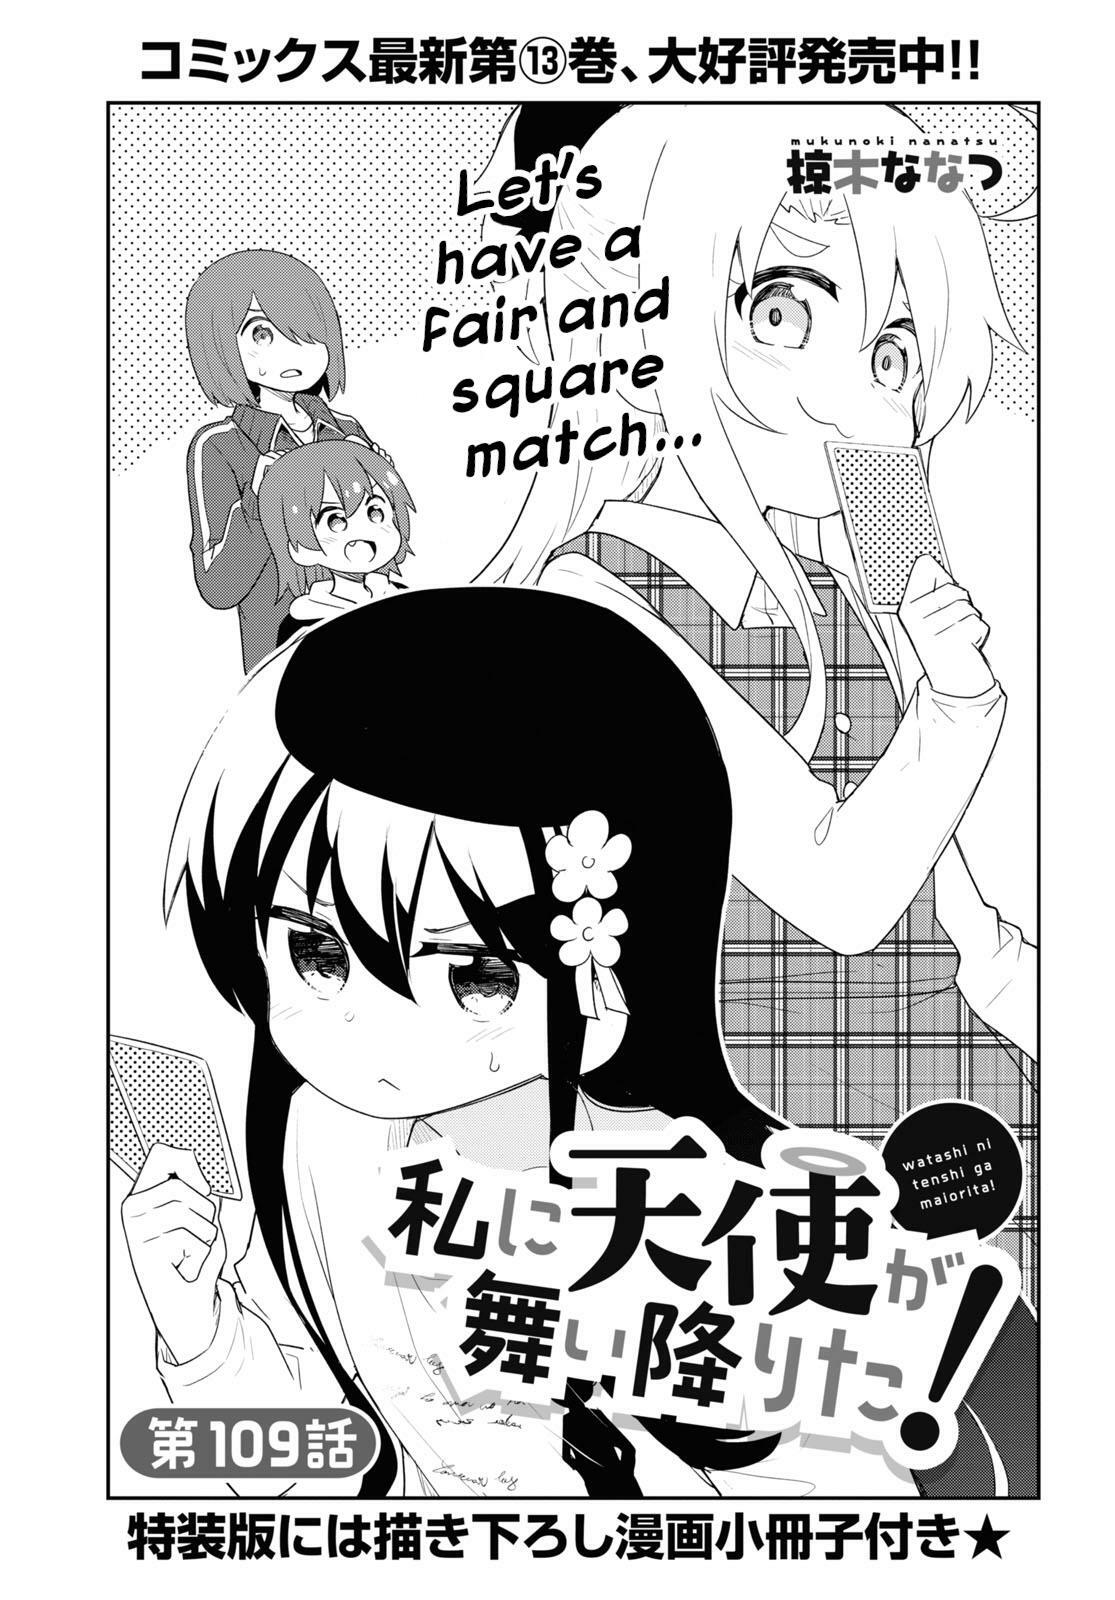 Read Watashi Ni Tenshi Ga Maiorita! Chapter 48 on Mangakakalot